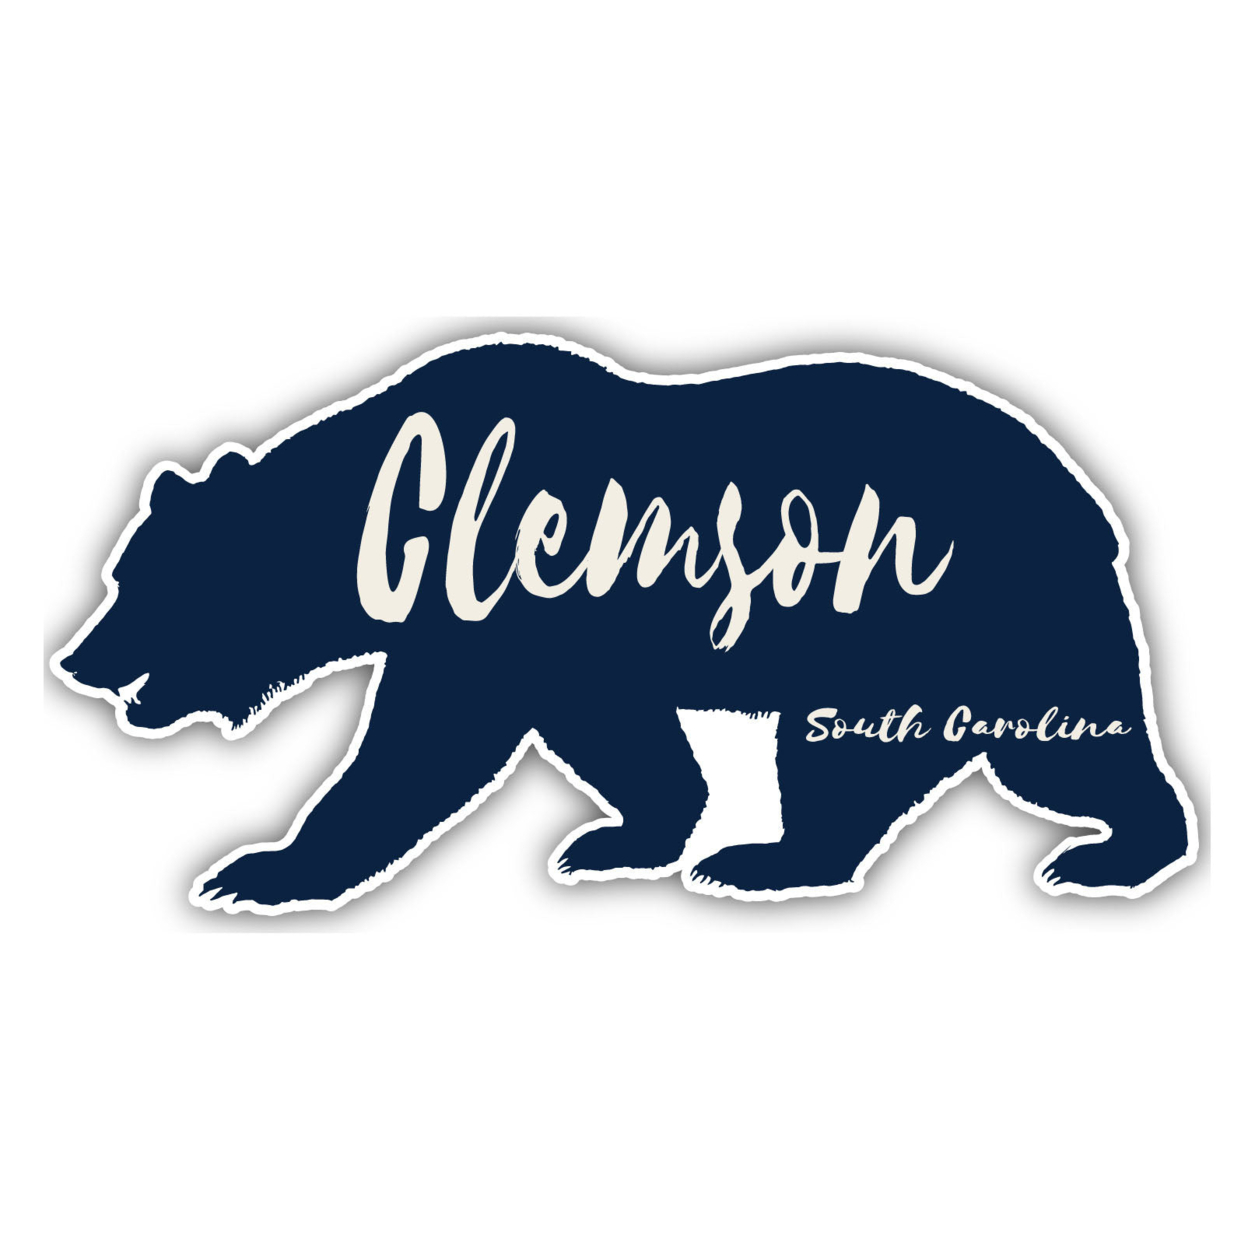 Clemson South Carolina Souvenir Decorative Stickers (Choose Theme And Size) - 4-Pack, 4-Inch, Bear